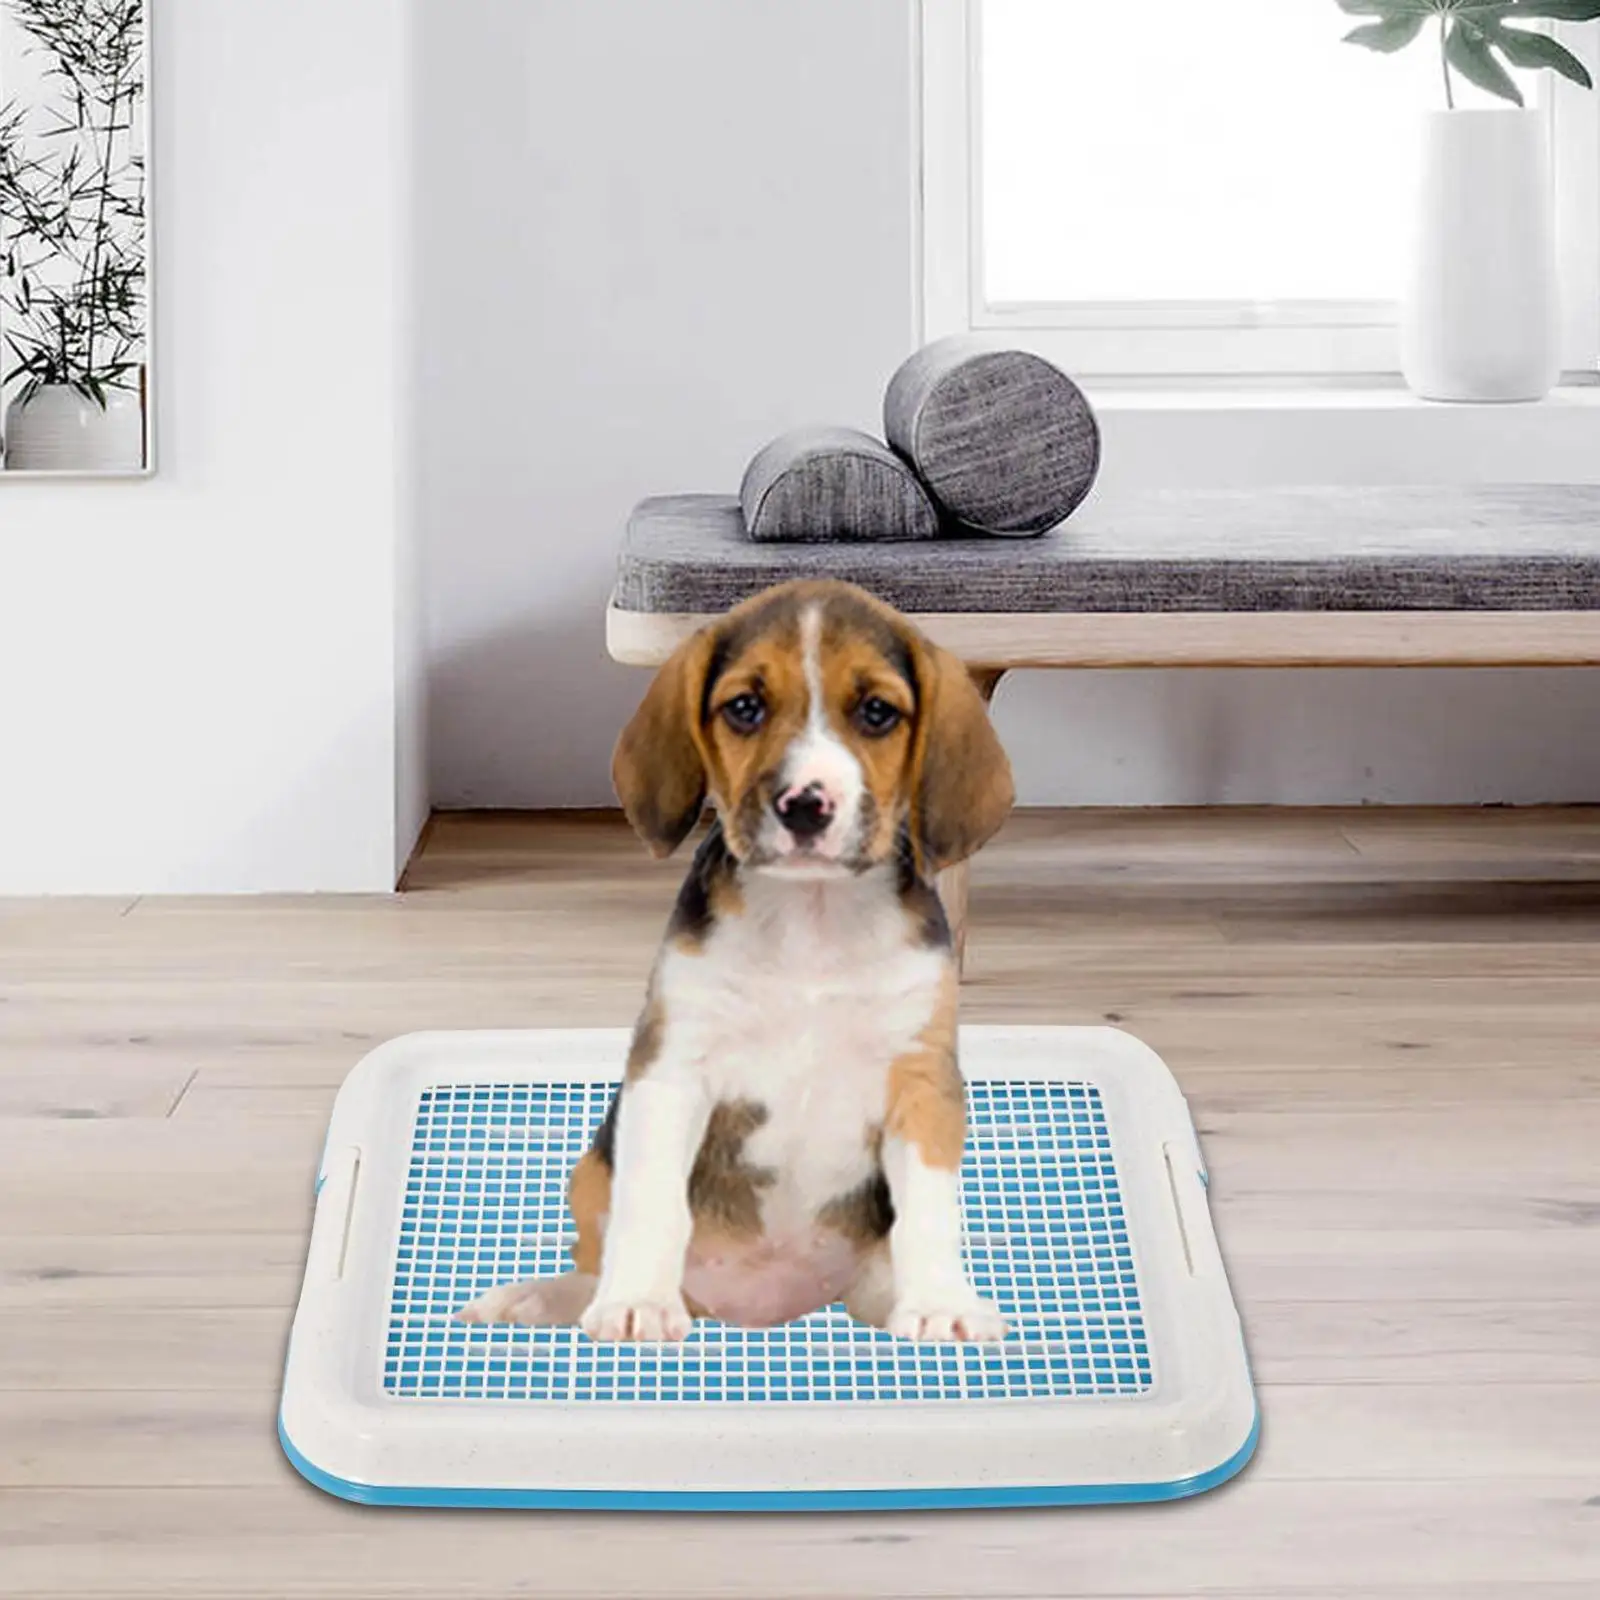 Dog Potty Toilet Training Tray 18.5x13.8 inch Removable Potty Trainer Dog Litter